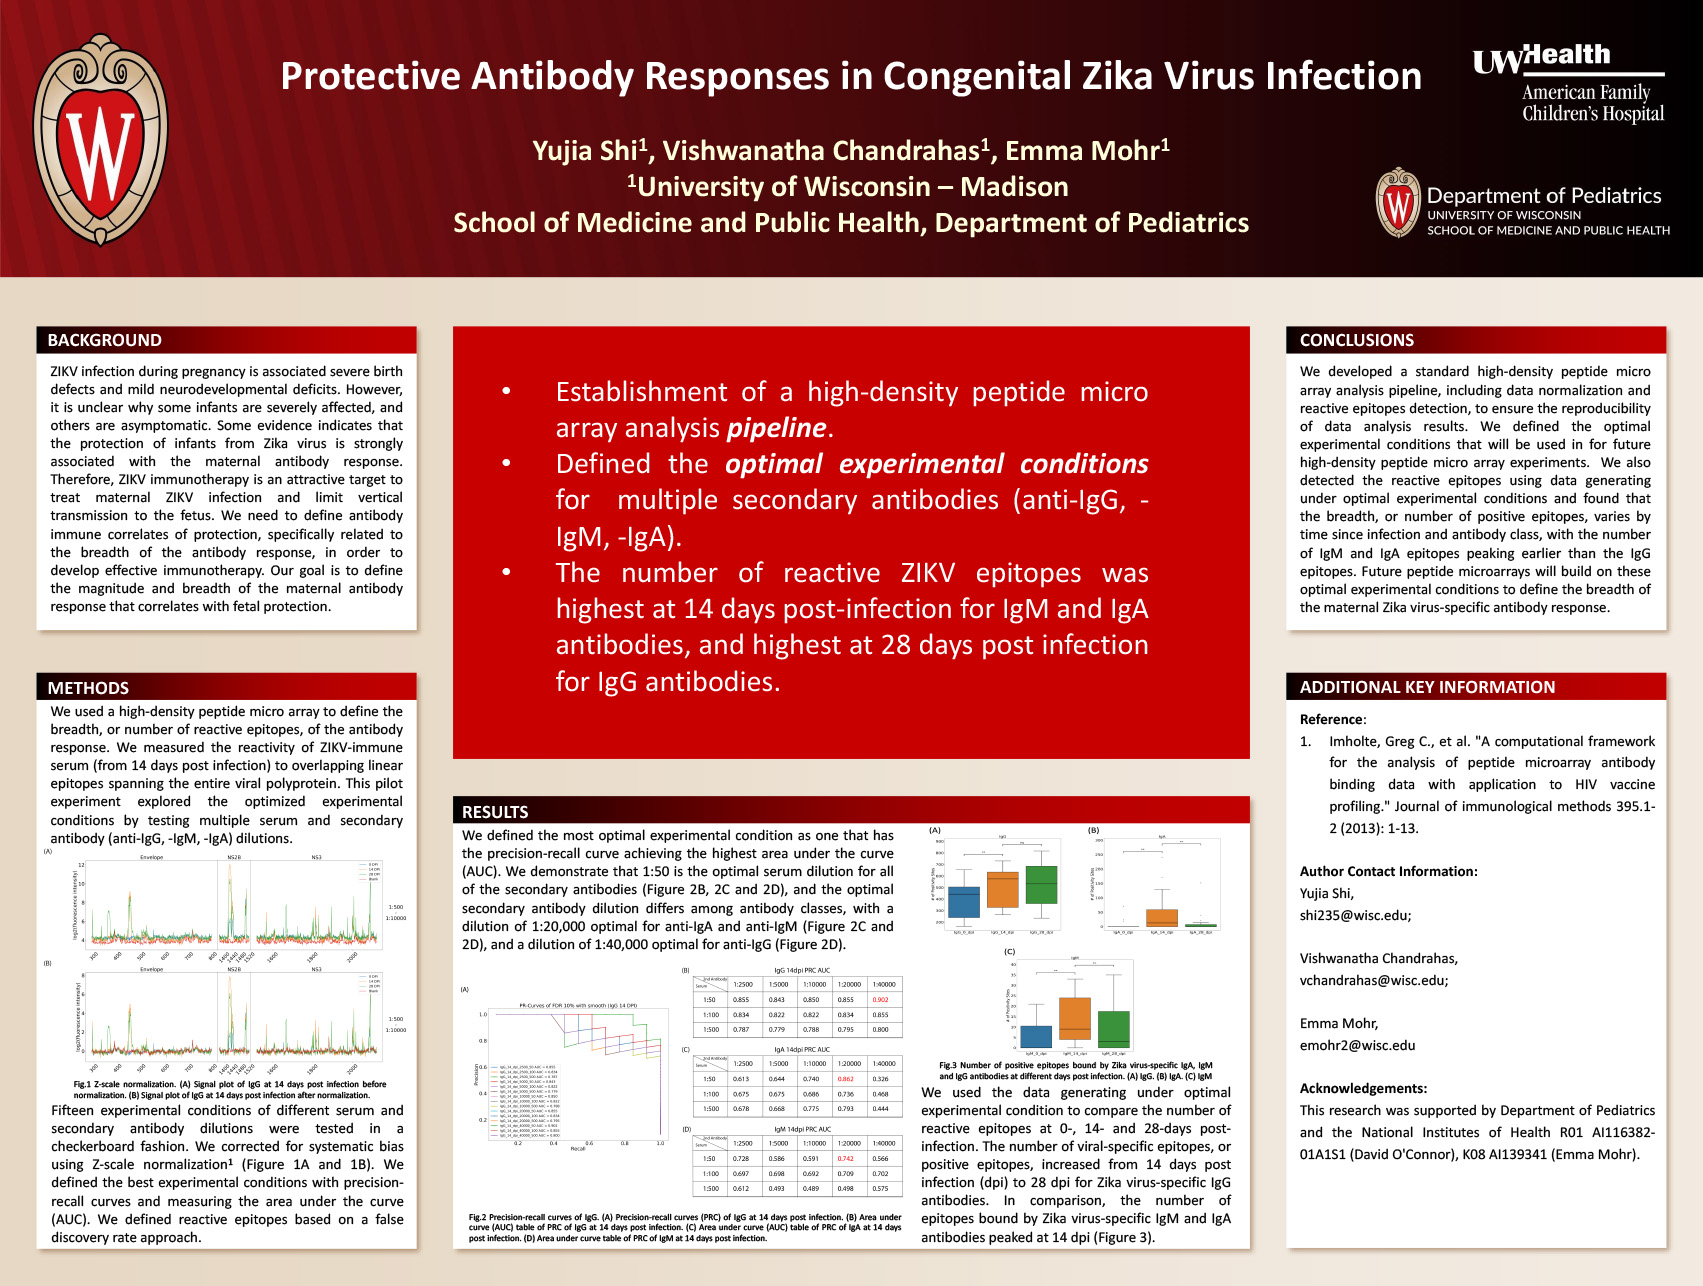 9. Protective Antibody Responses in Congenital Zika Virus Infection poster image